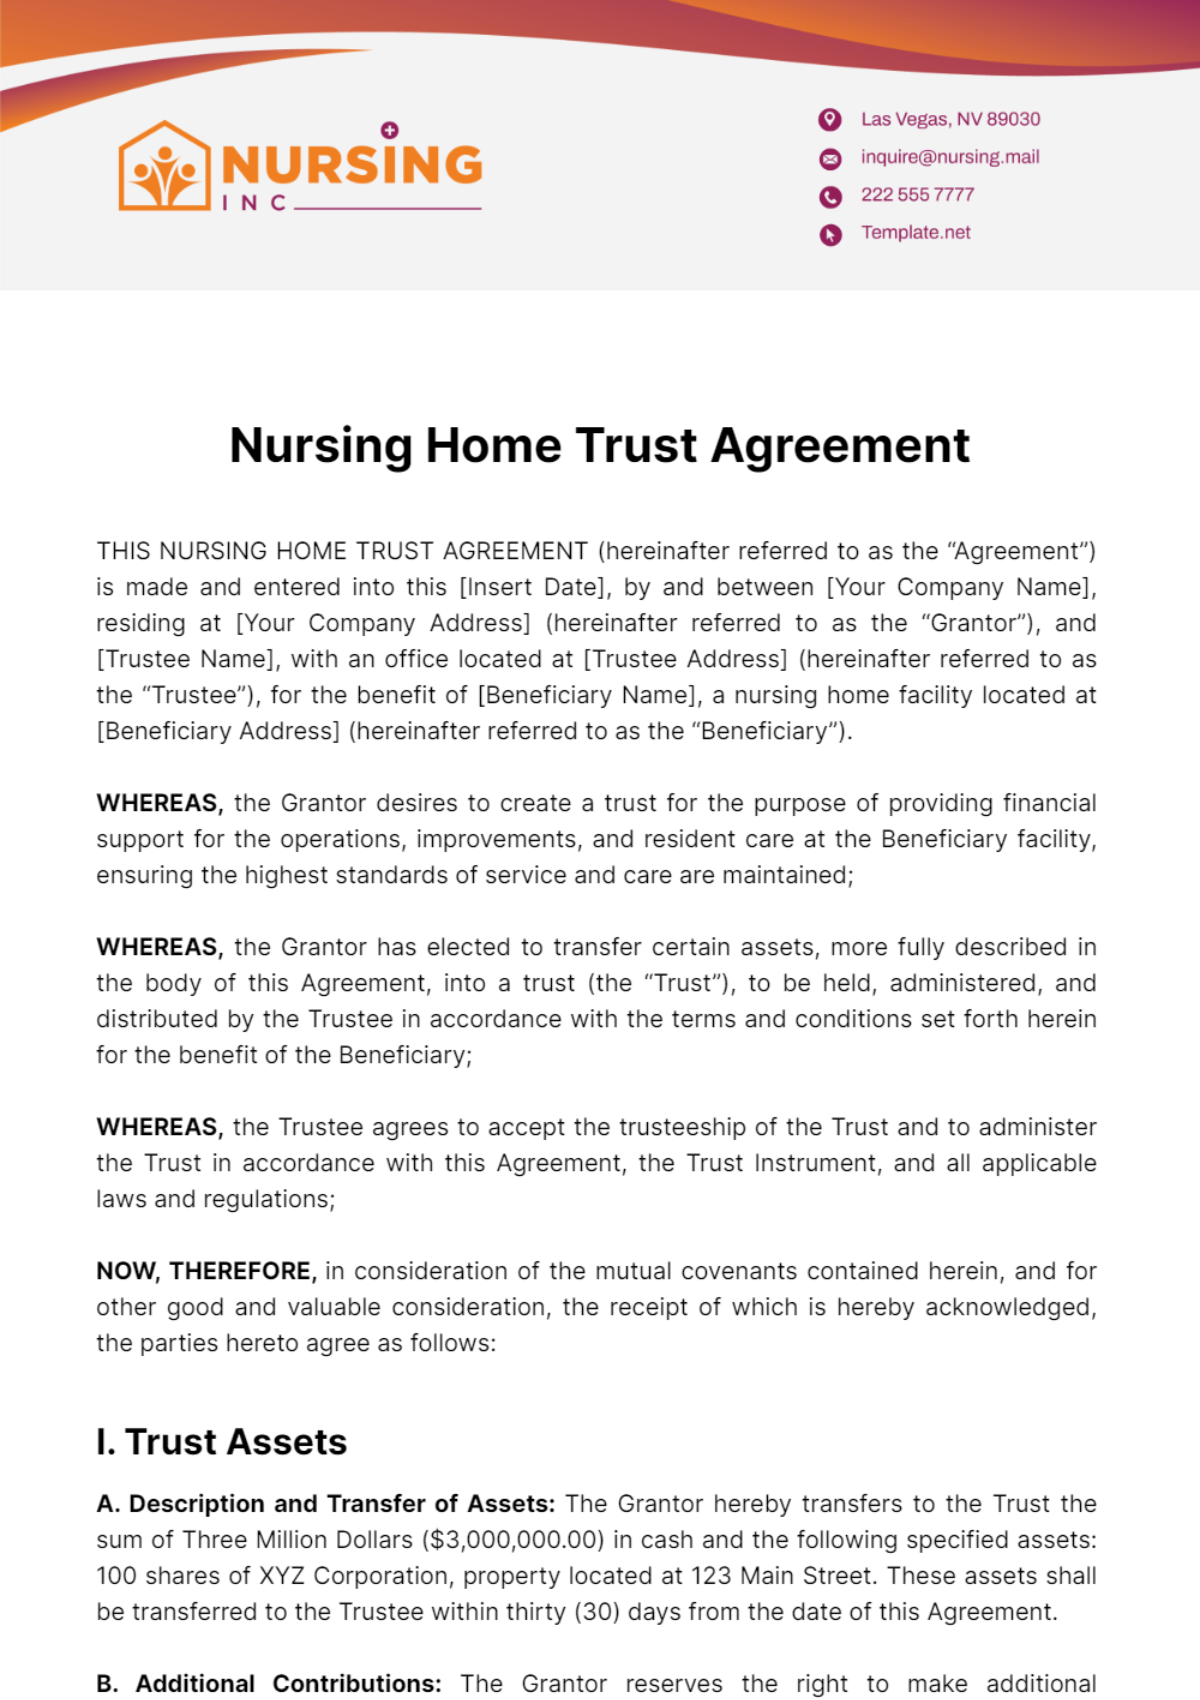 Nursing Home Trust Agreement Template